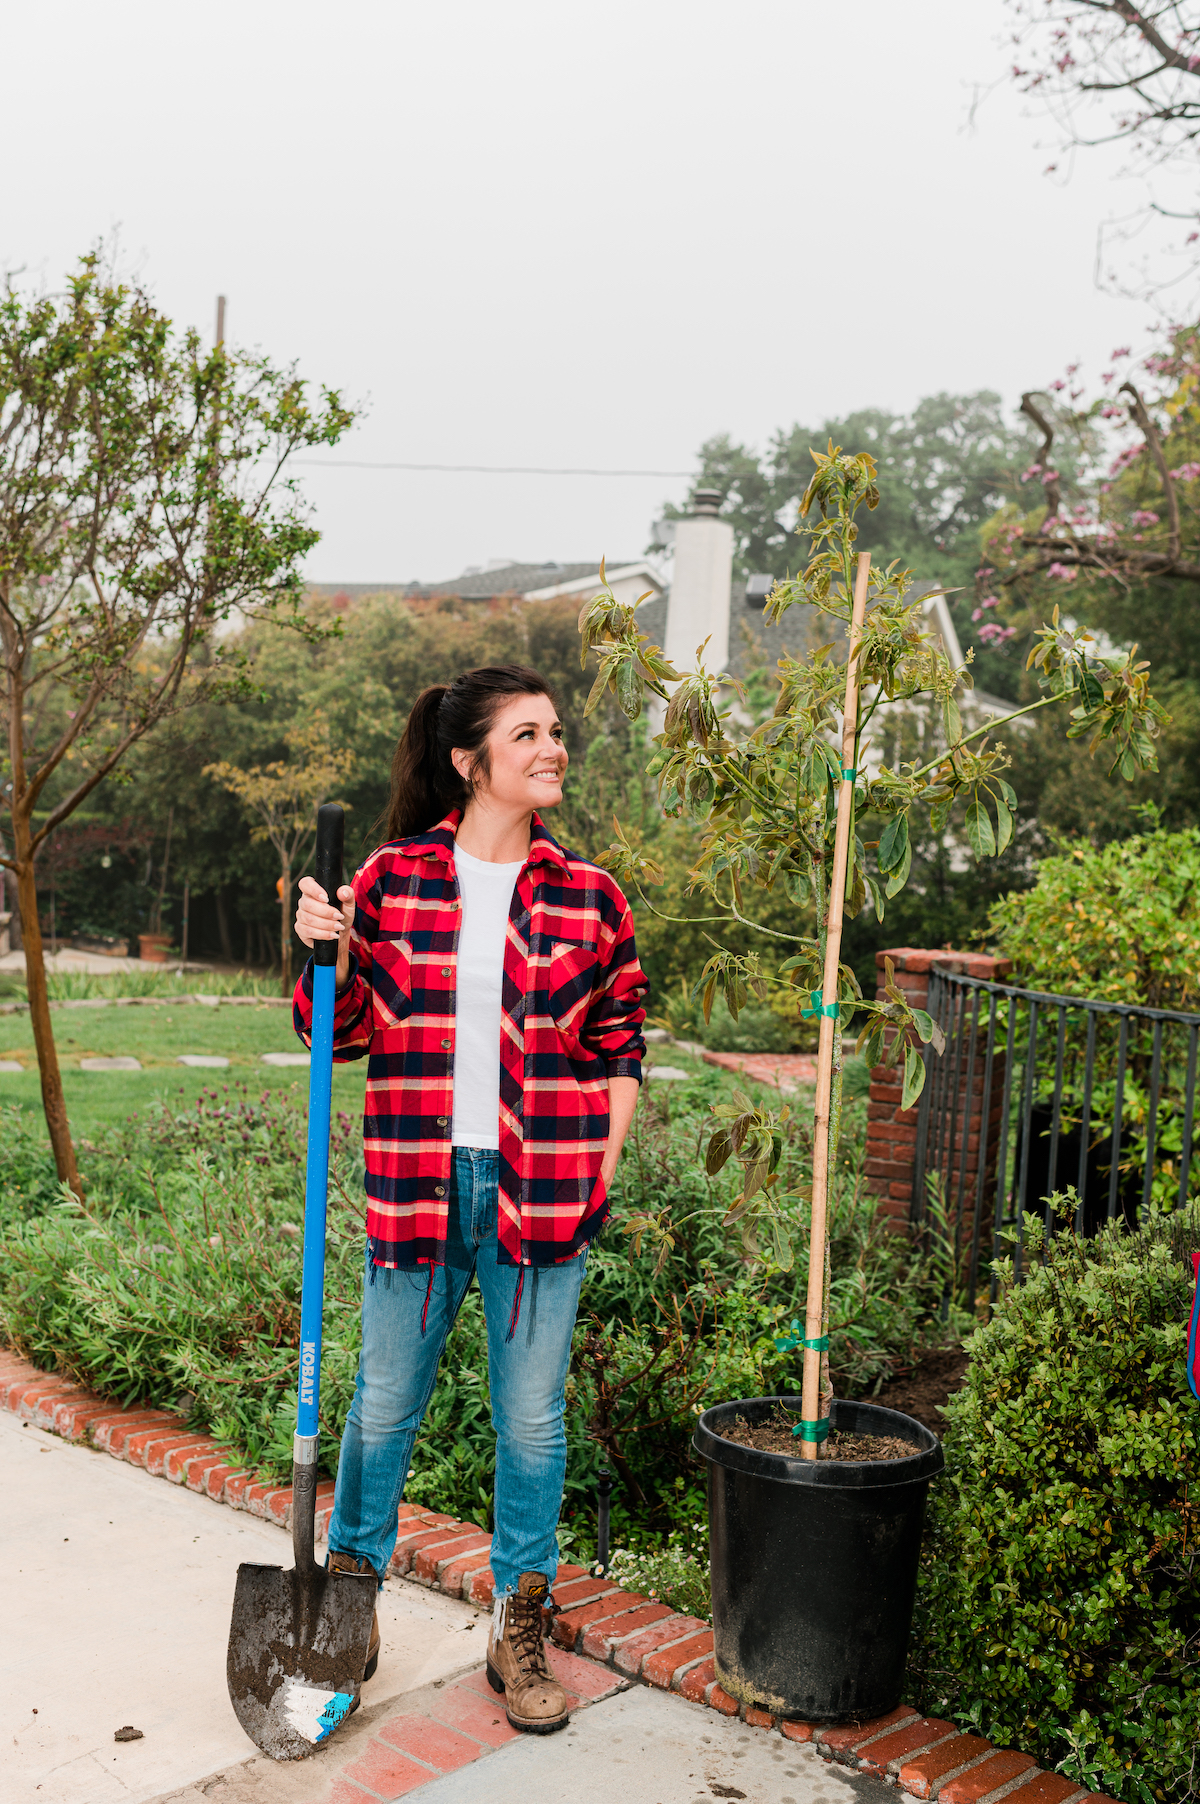 Actress Tiffani Thiessen holding shovel in garden